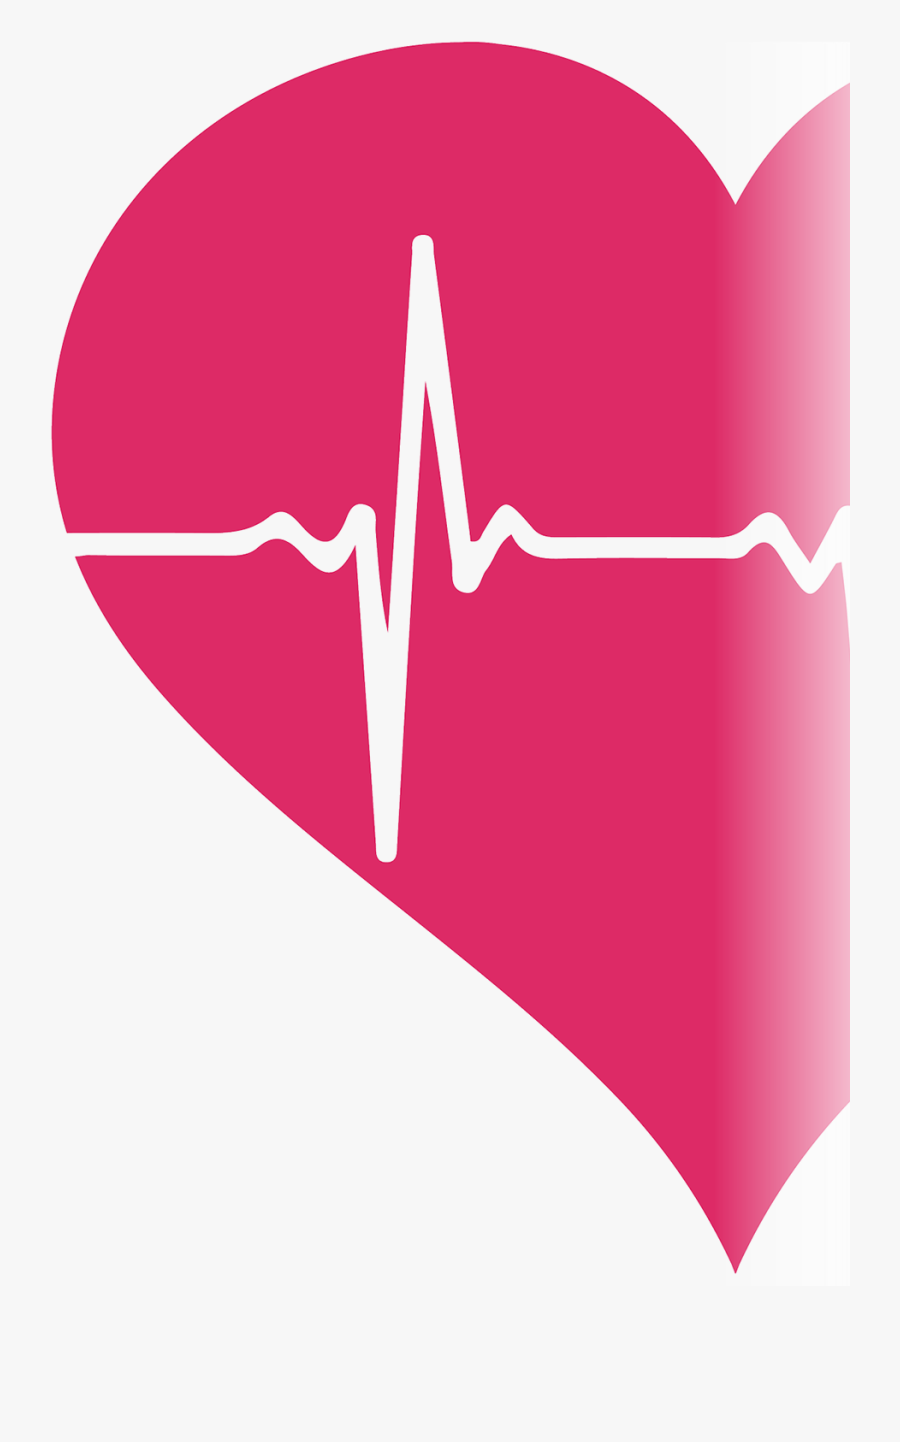 Heartbeat Clipart Sinus Rhythm - Graphic Design, Transparent Clipart